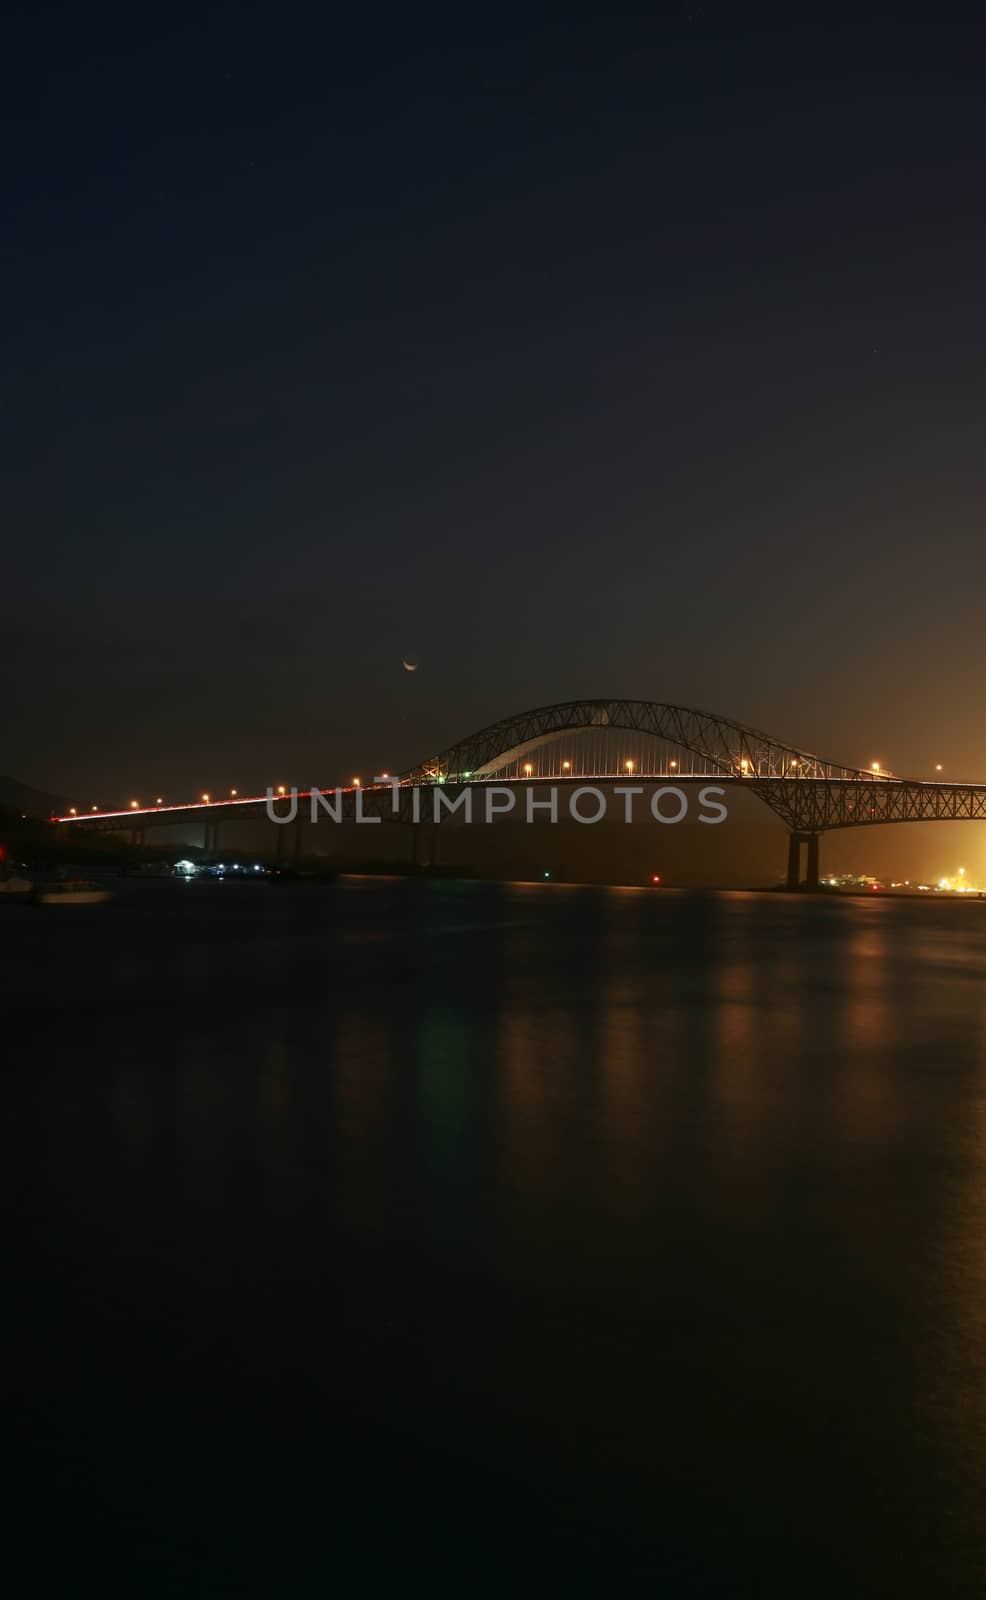 The TransAmerica Bridge in Panama City at night by dacasdo